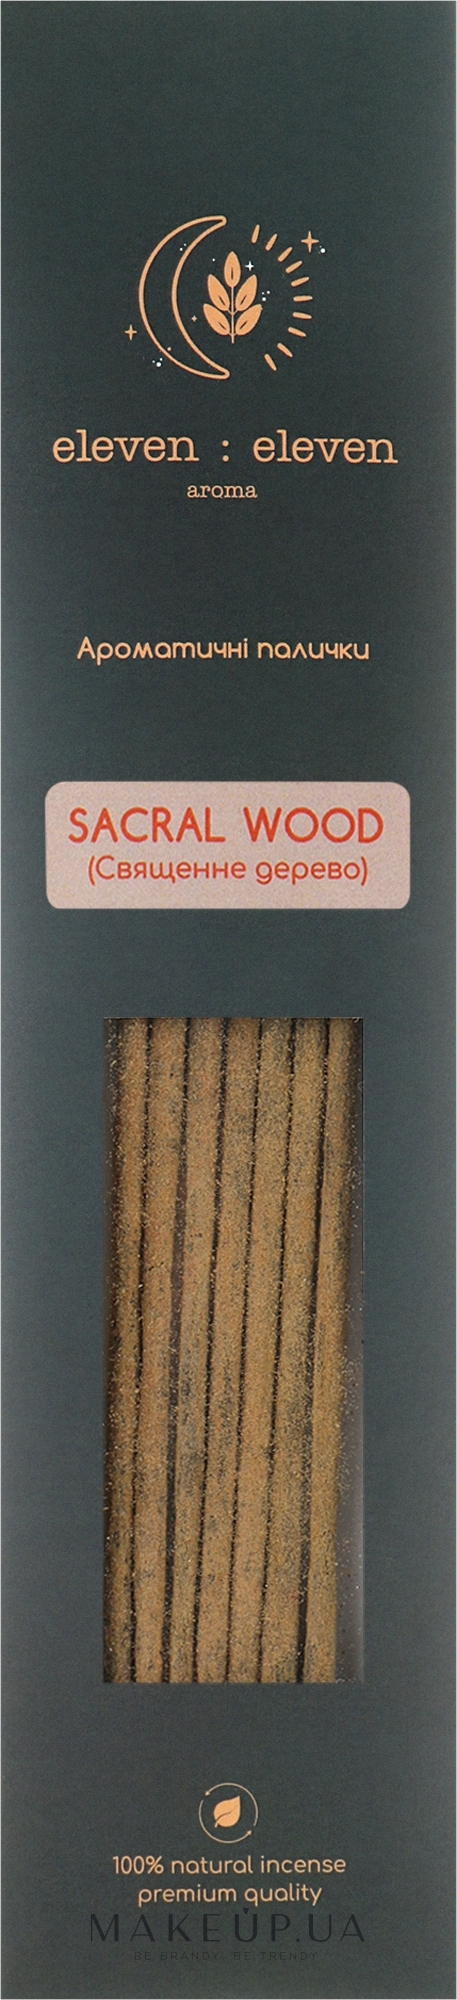 Аромапалички "Священне дерево" - Eleven Eleven Aroma Sacral Wood Aroma Sticks — фото 10шт